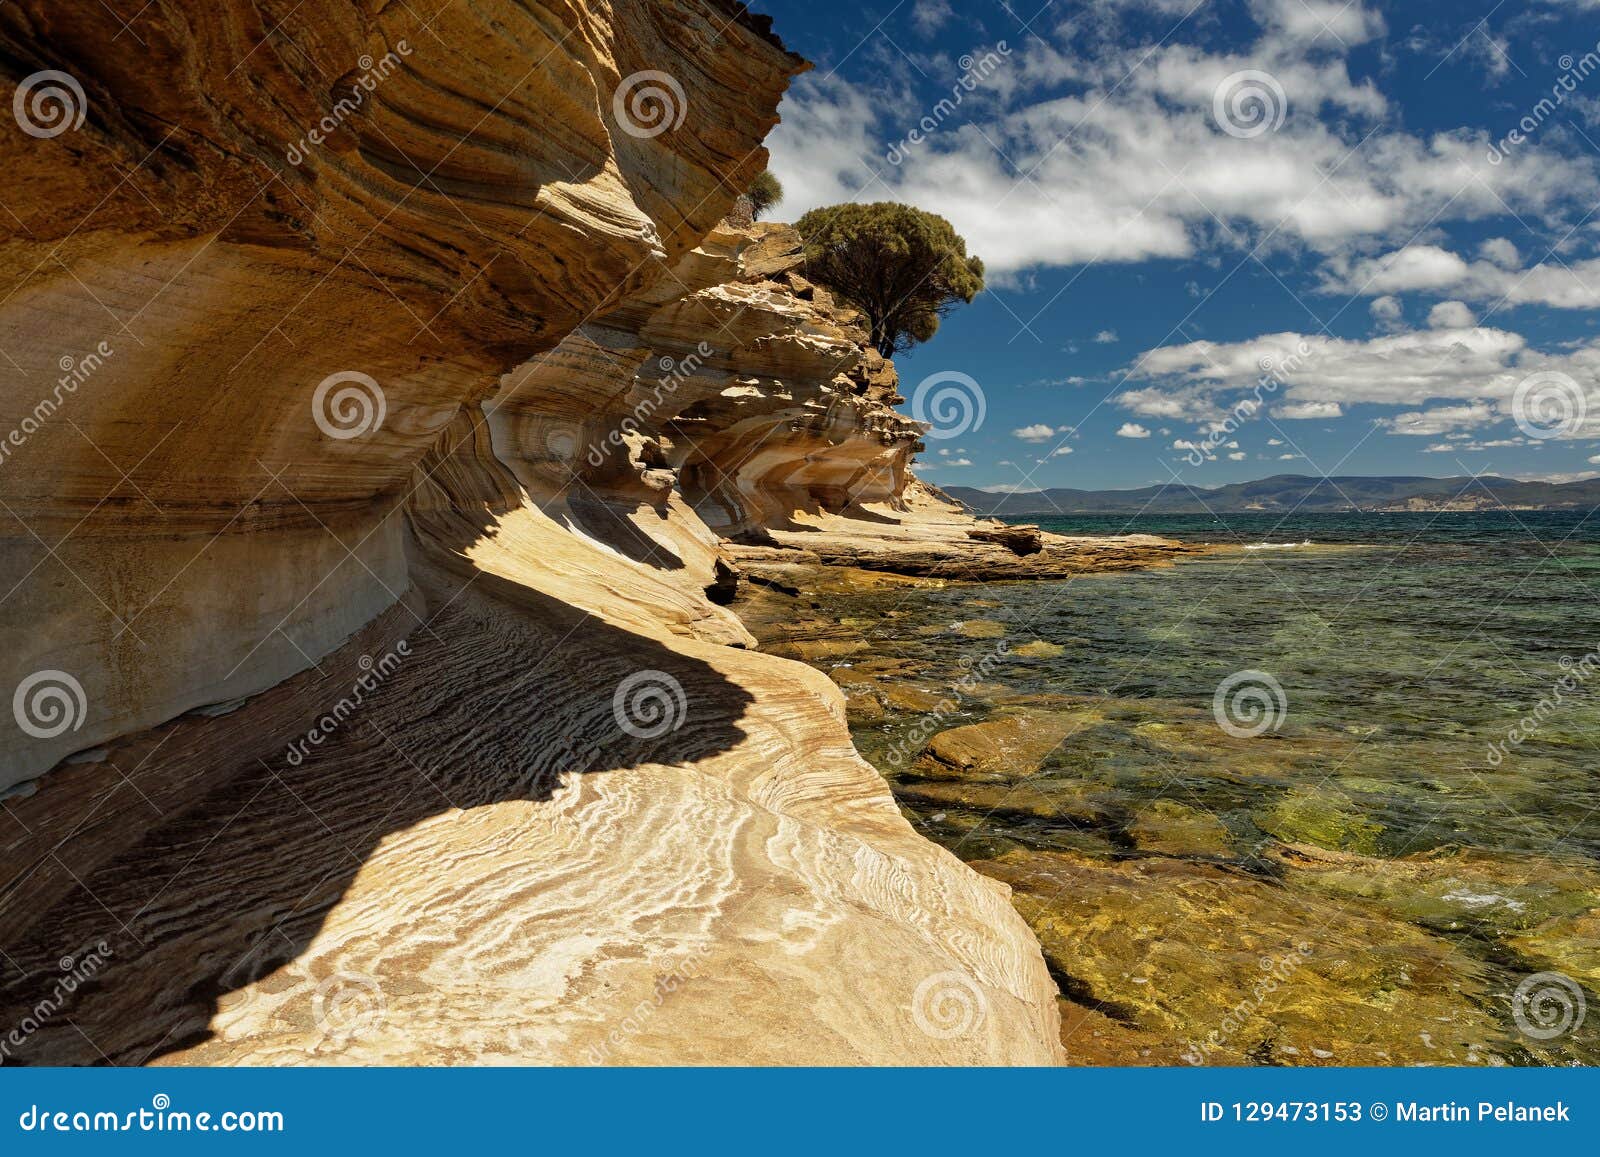 painted cliffs, maria island, tasmania, national reservation, australia